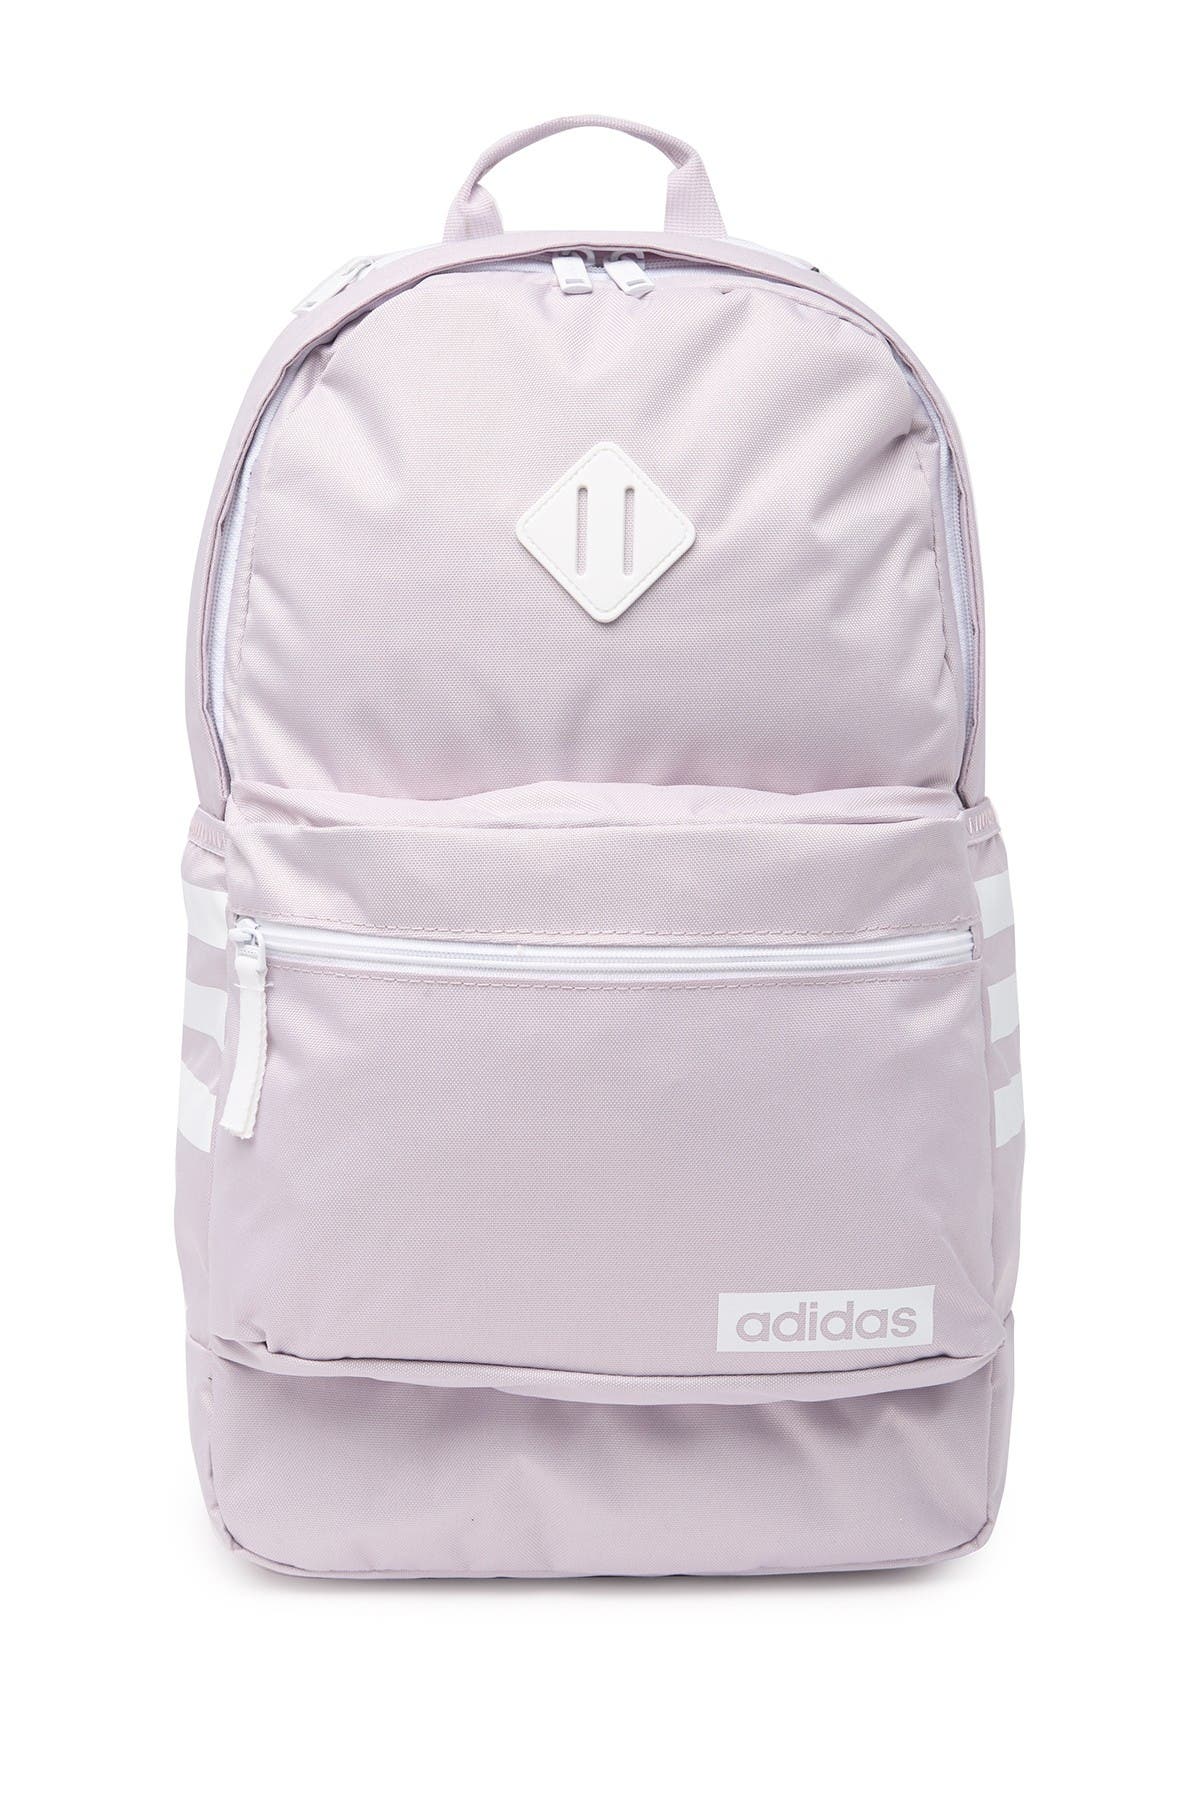 classic 3s iii backpack